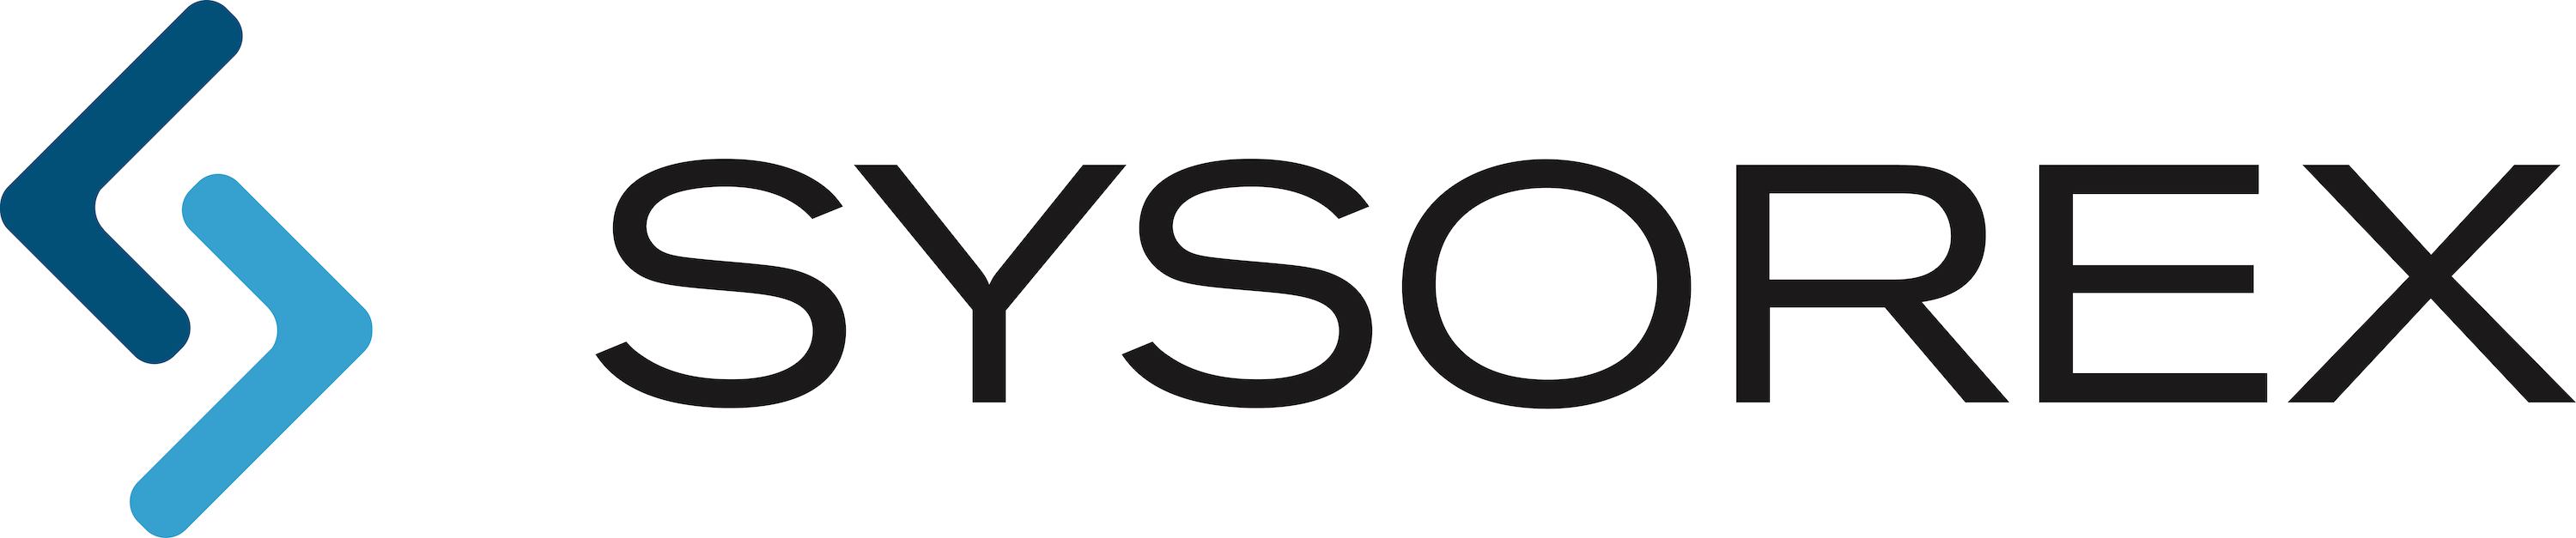 sysorex-logo3000x627.jpg